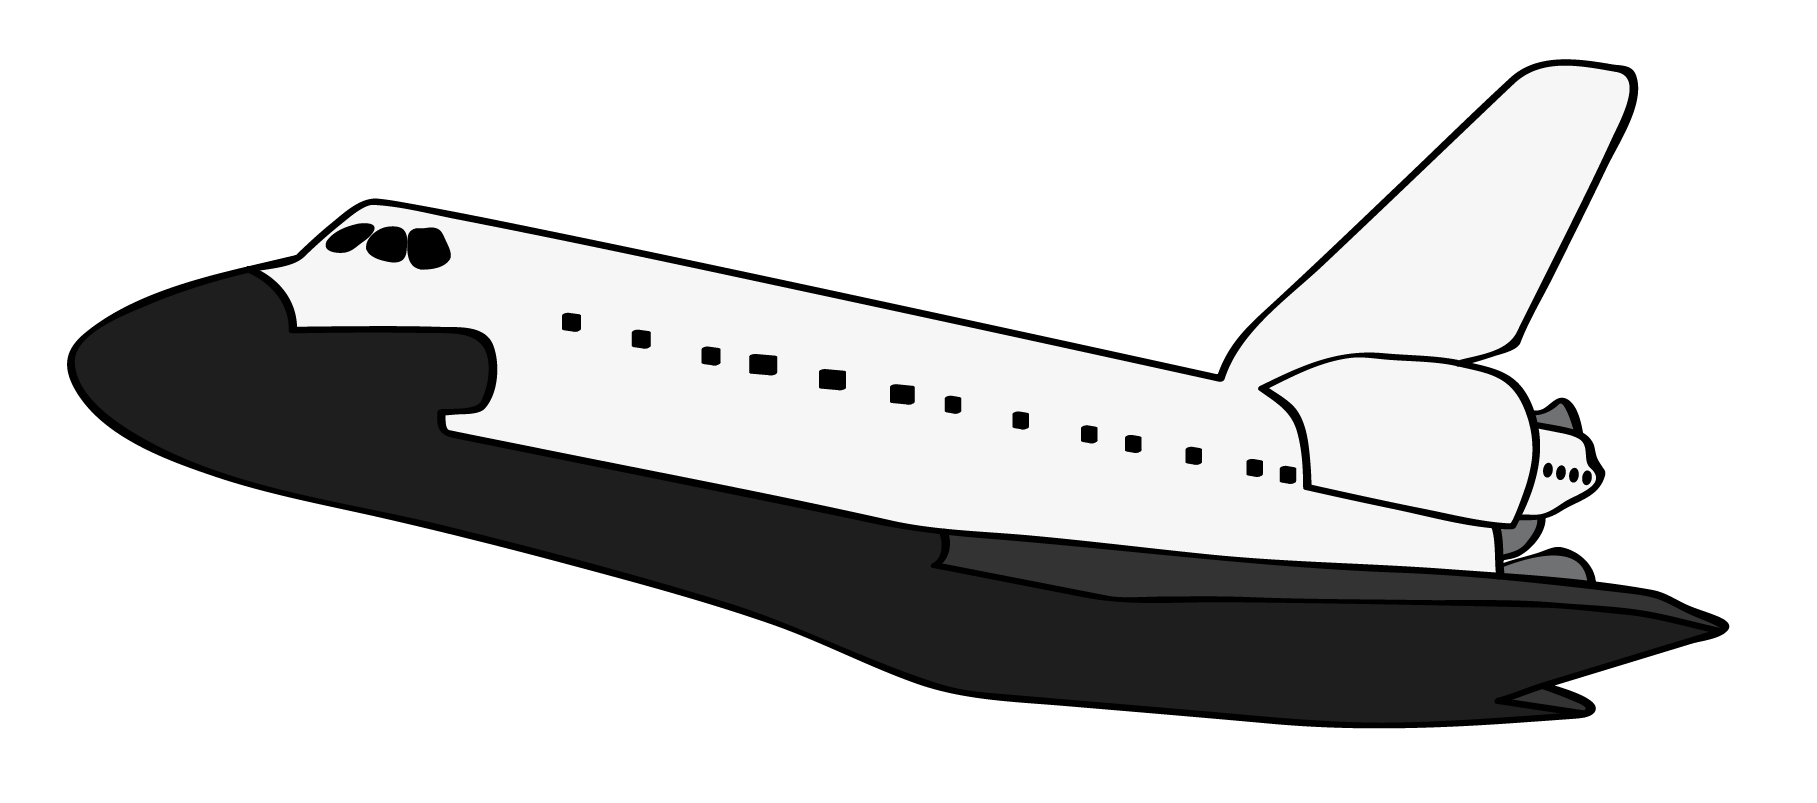 Space Shuttle - Illustration 